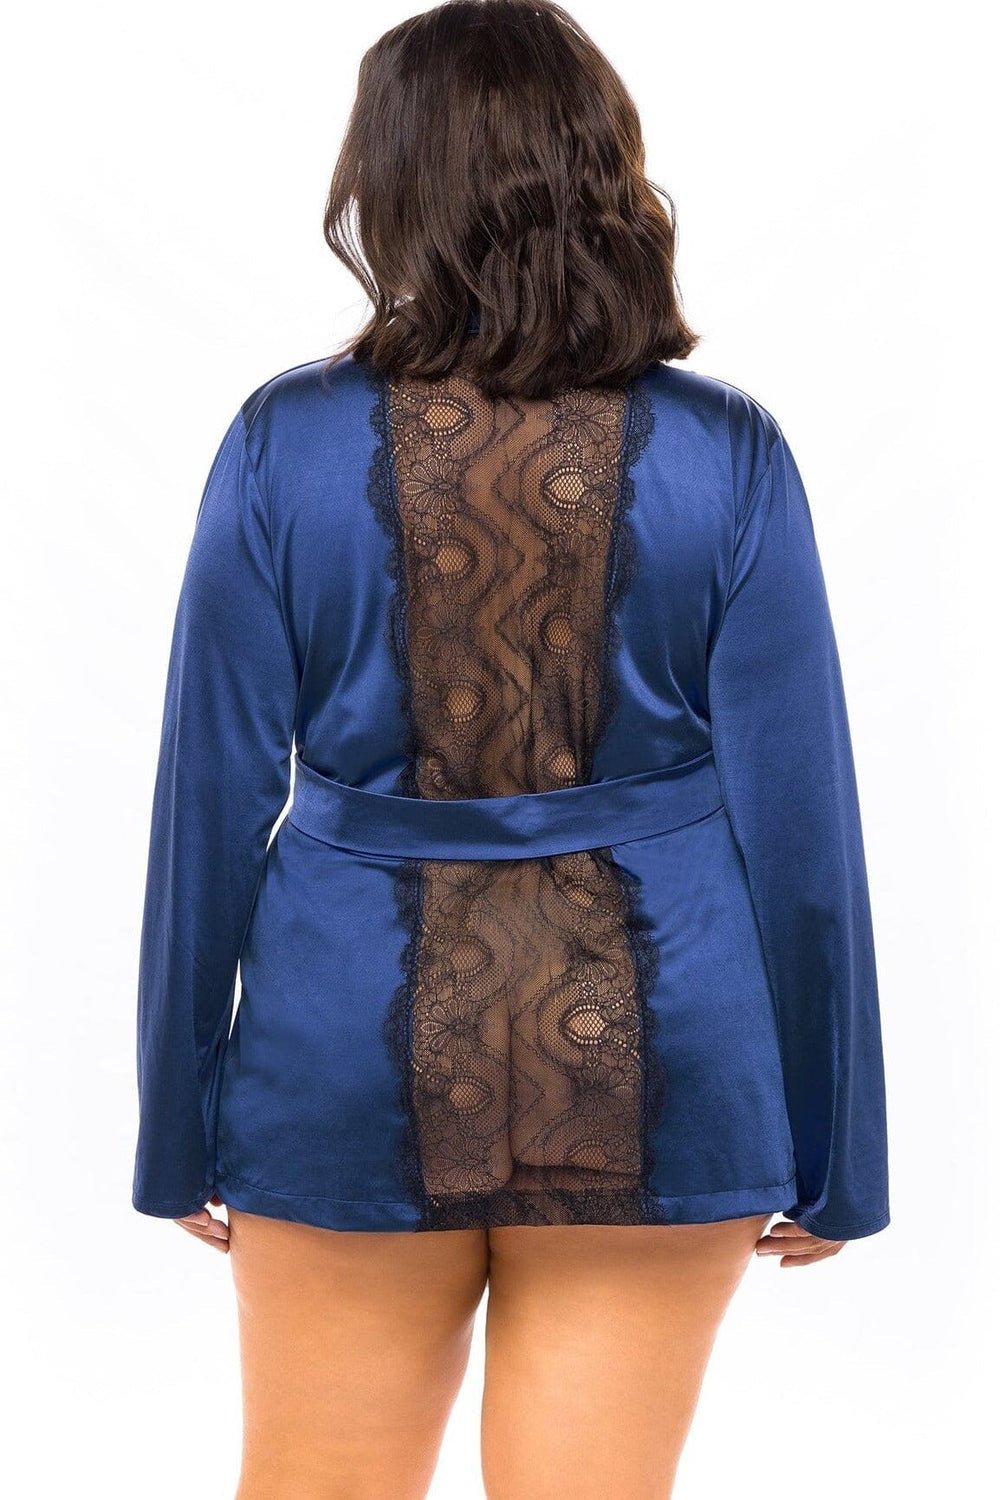 Tuxedo Jacket With Pockets-Gowns + Robes-Oh La La Cheri-Blue-1X/2XL-SEXYSHOES.COM